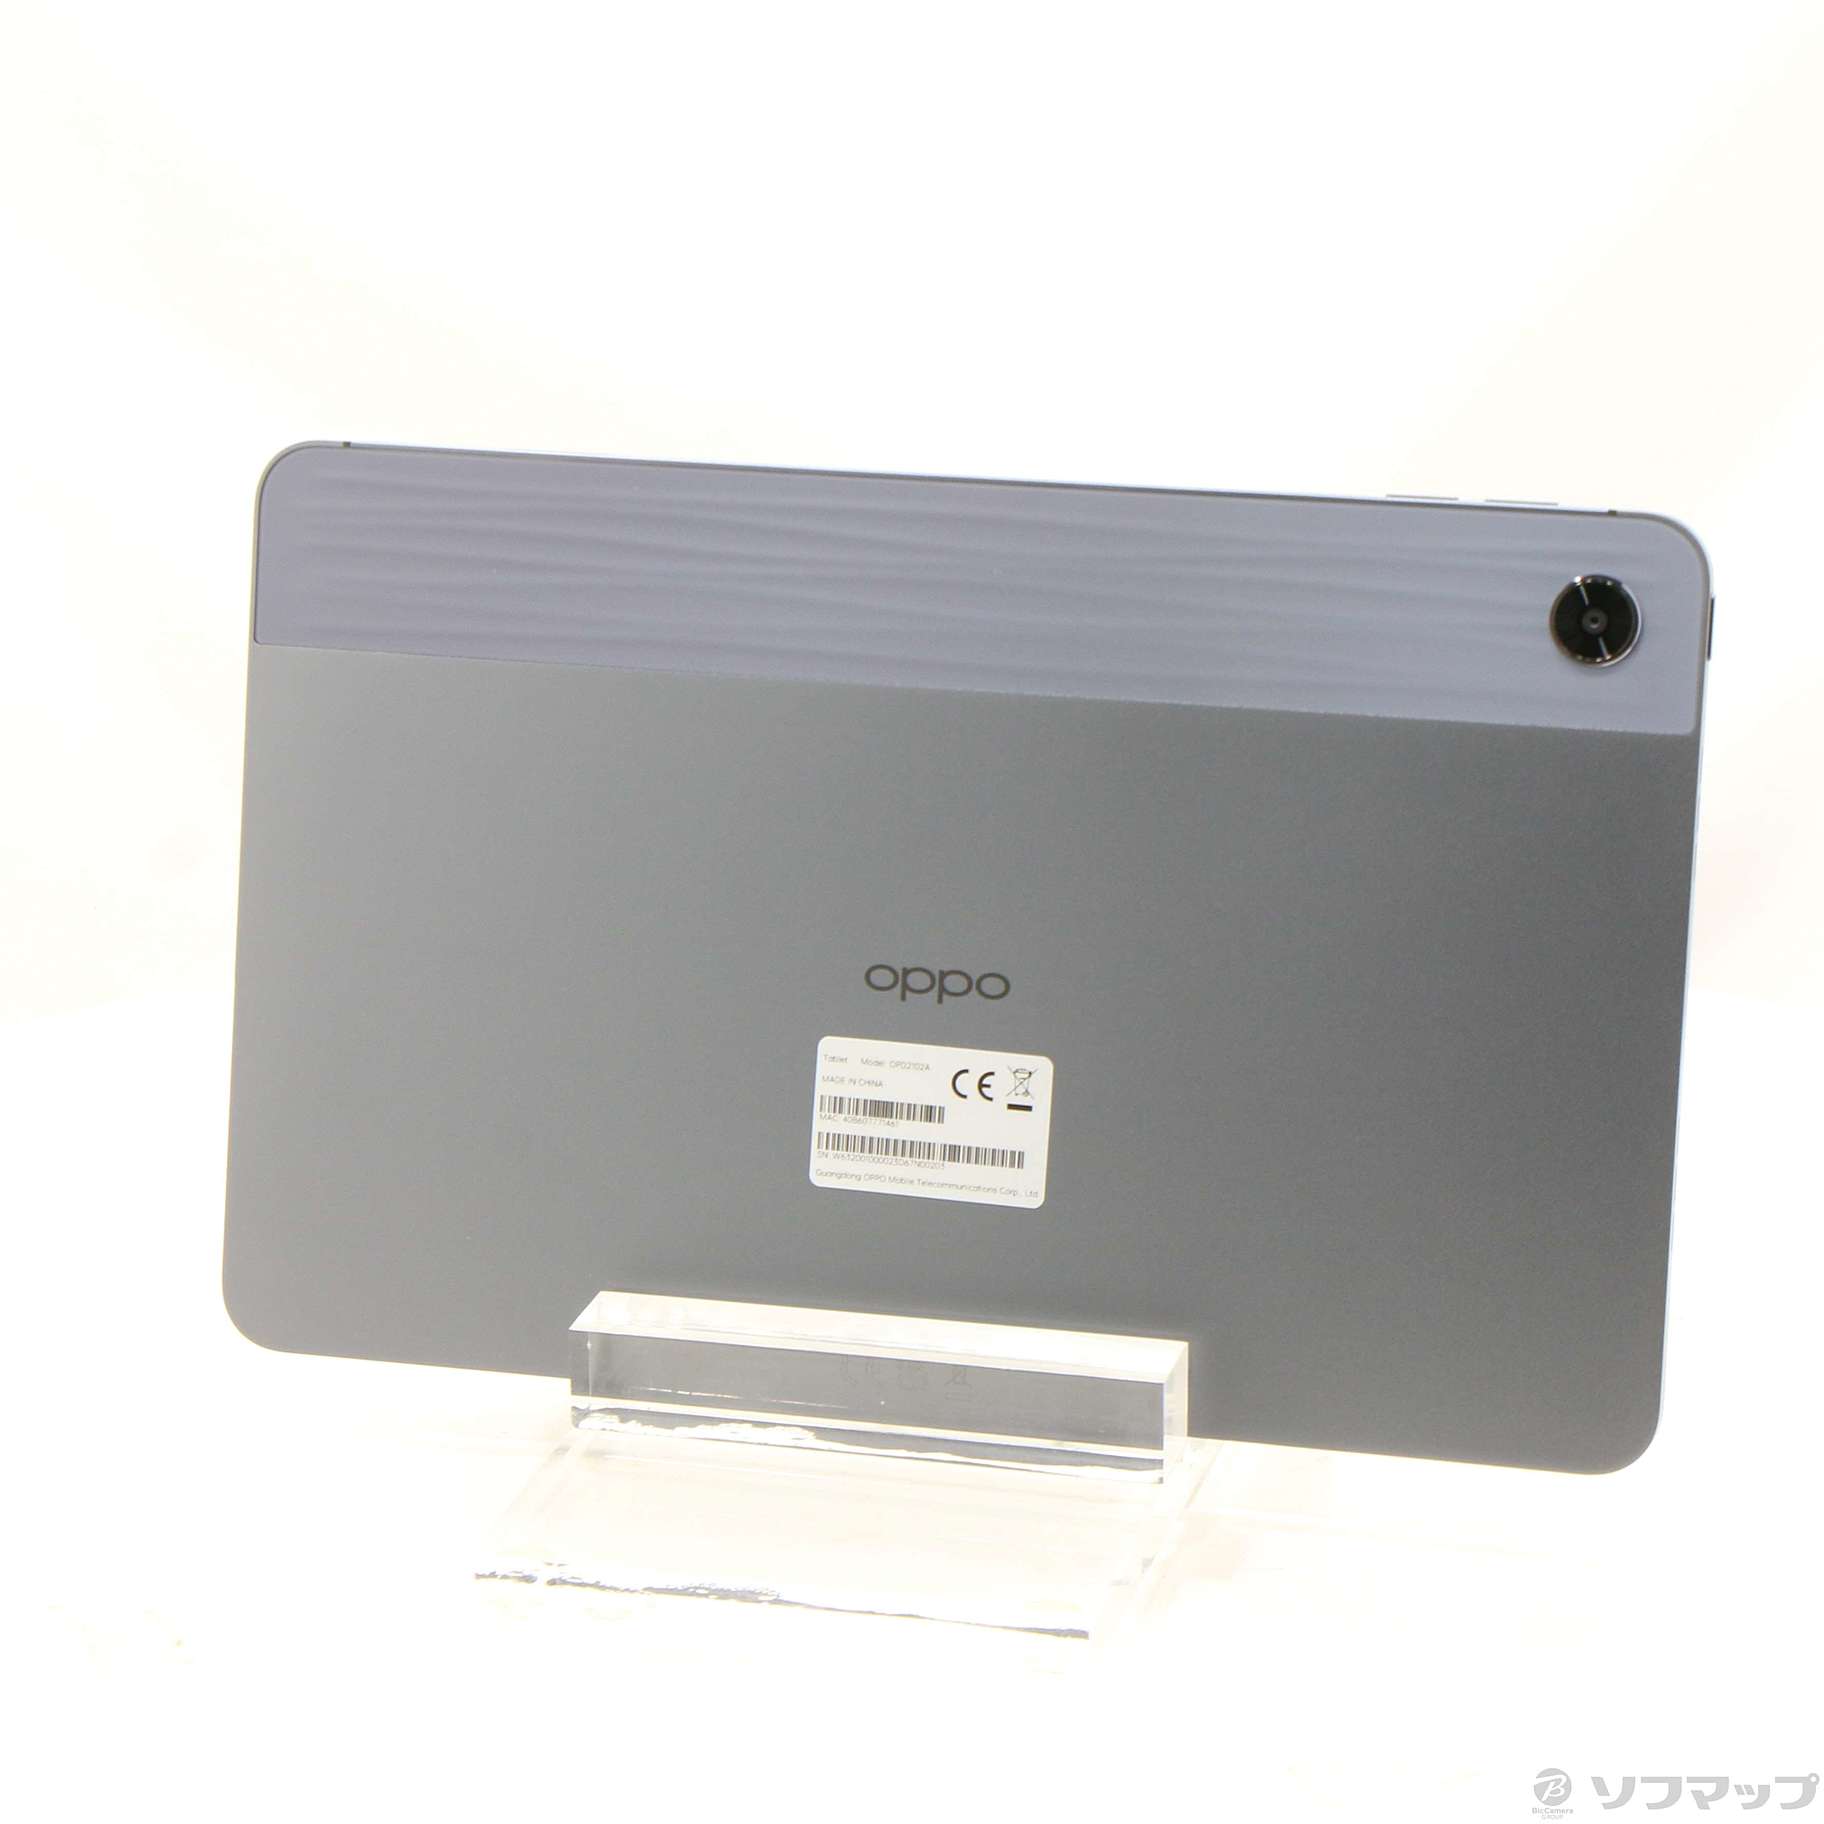 OPPO Pad Air タブレット 128GB ケース付き【新品 未開封】